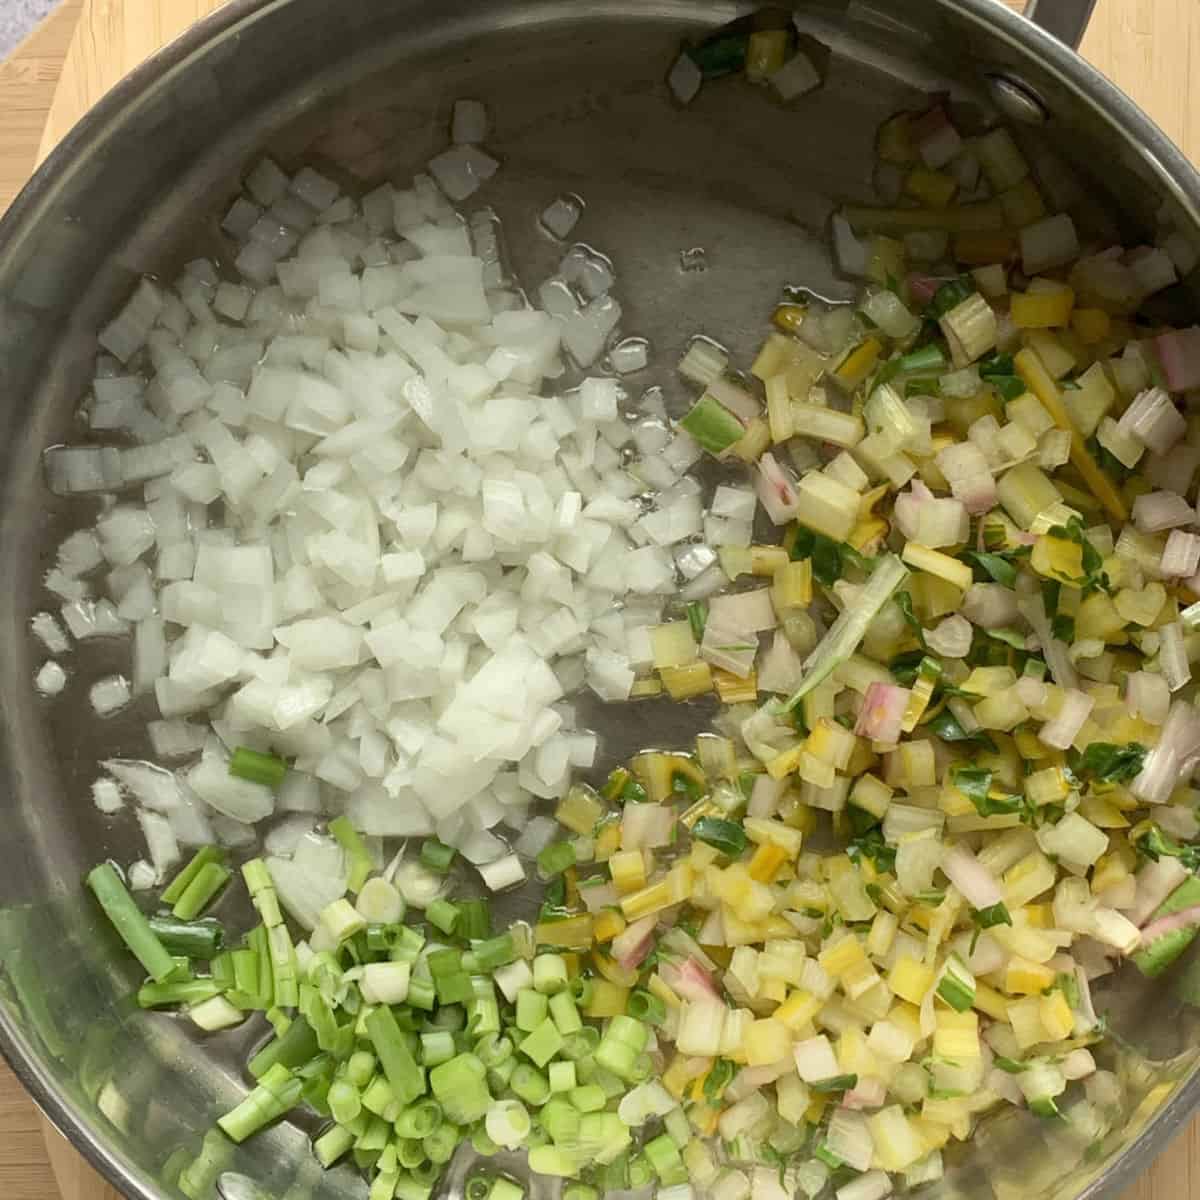 Sautéing onions in a saute pan. 